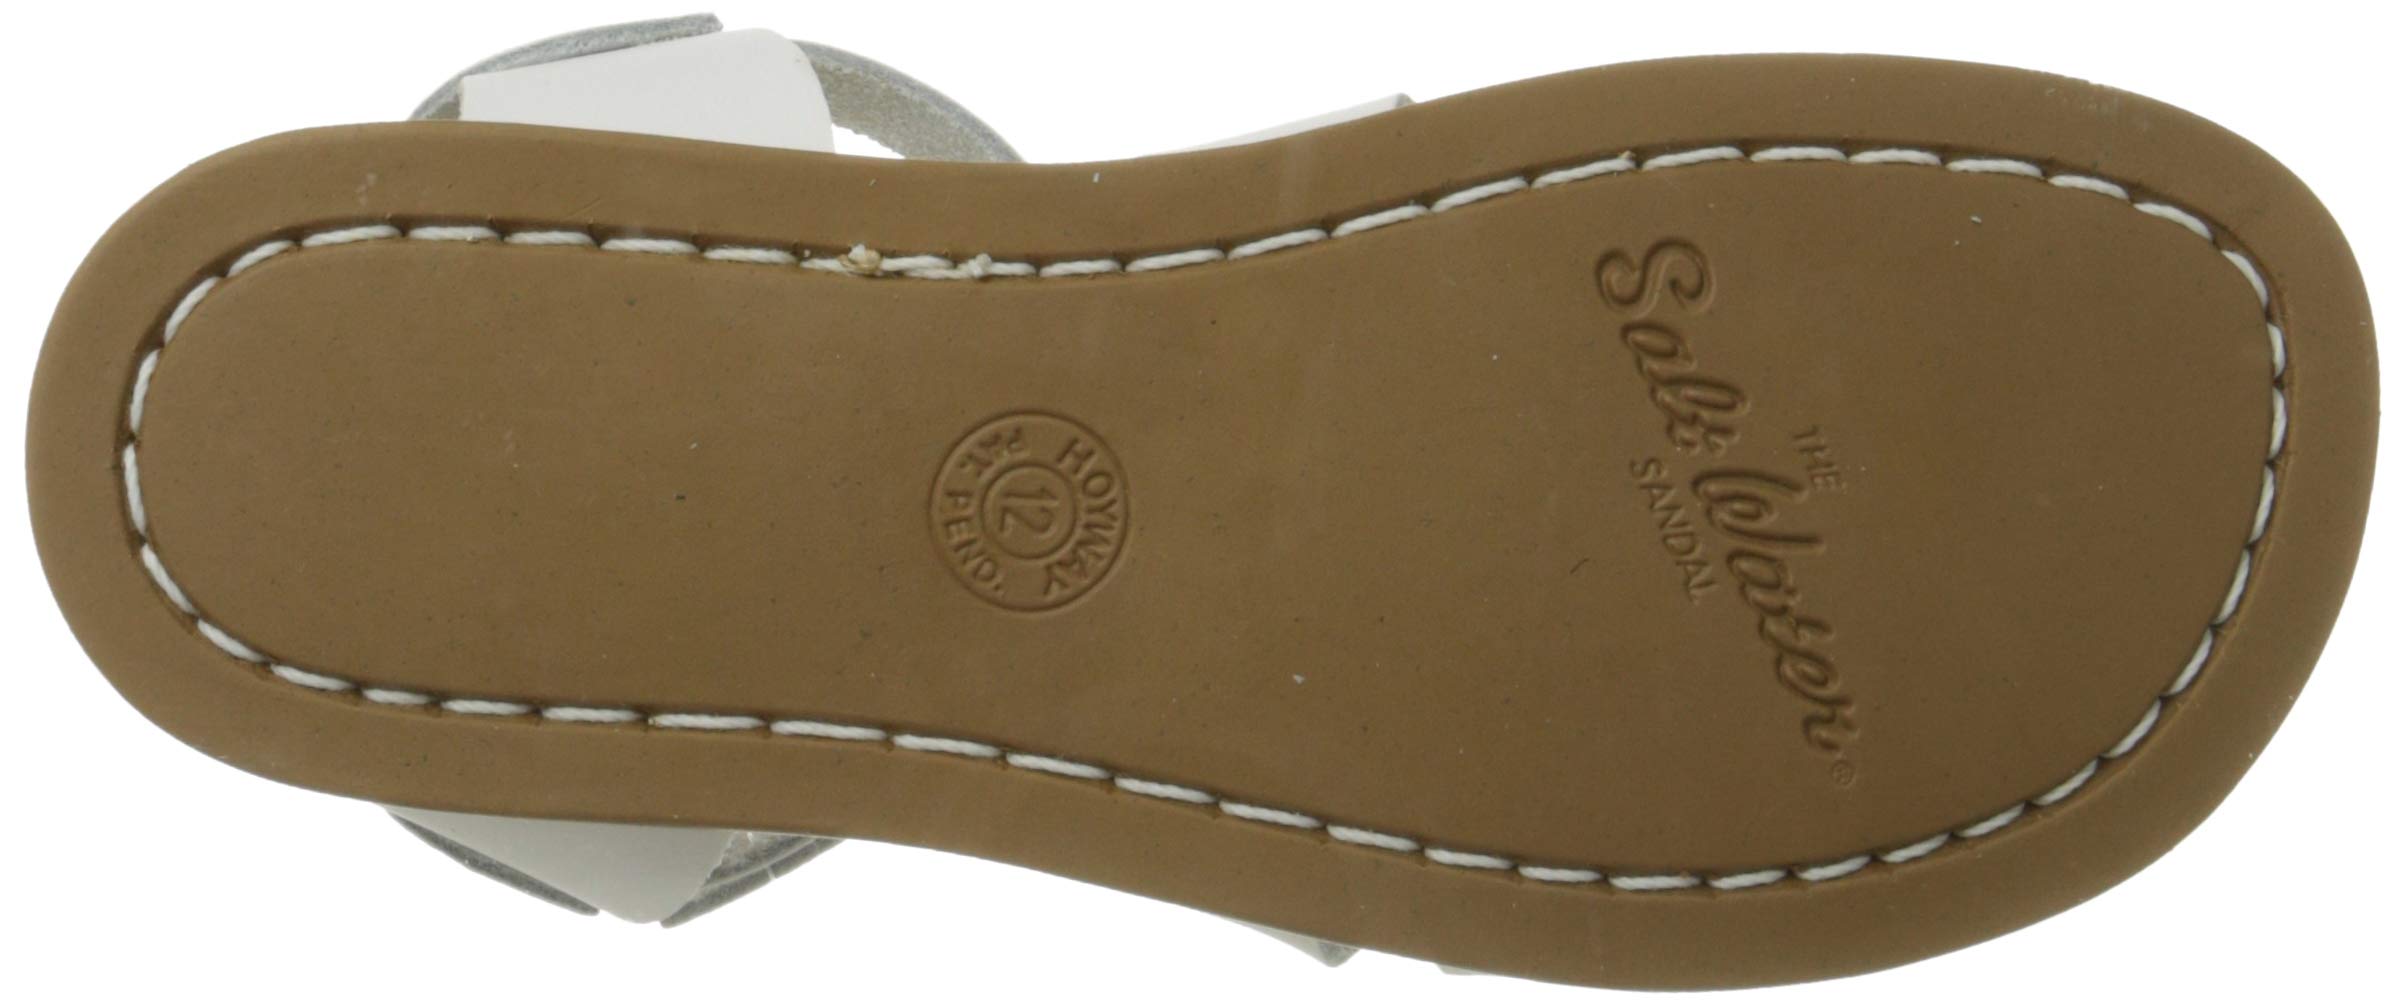 Salt Water Sandals by Hoy Shoe The Original Sandal